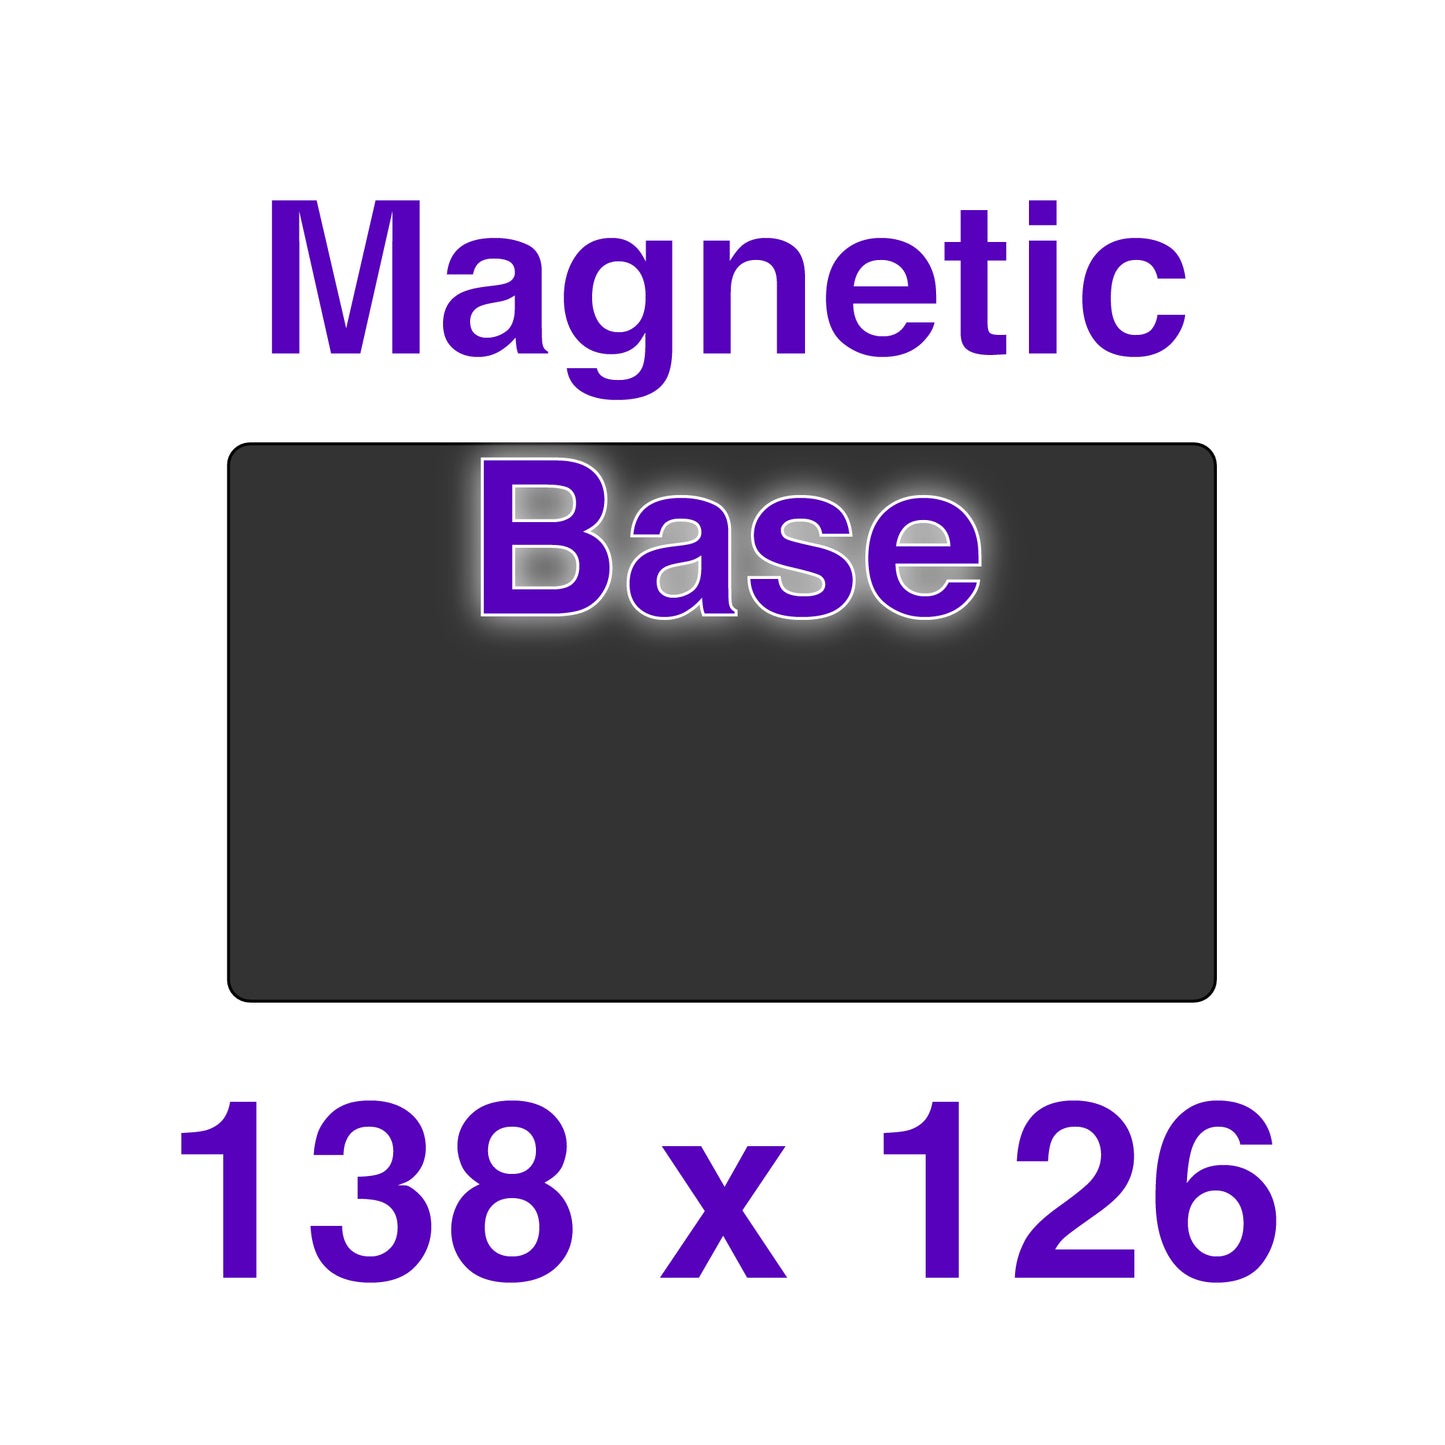 Magnetic Base - 138 x 126